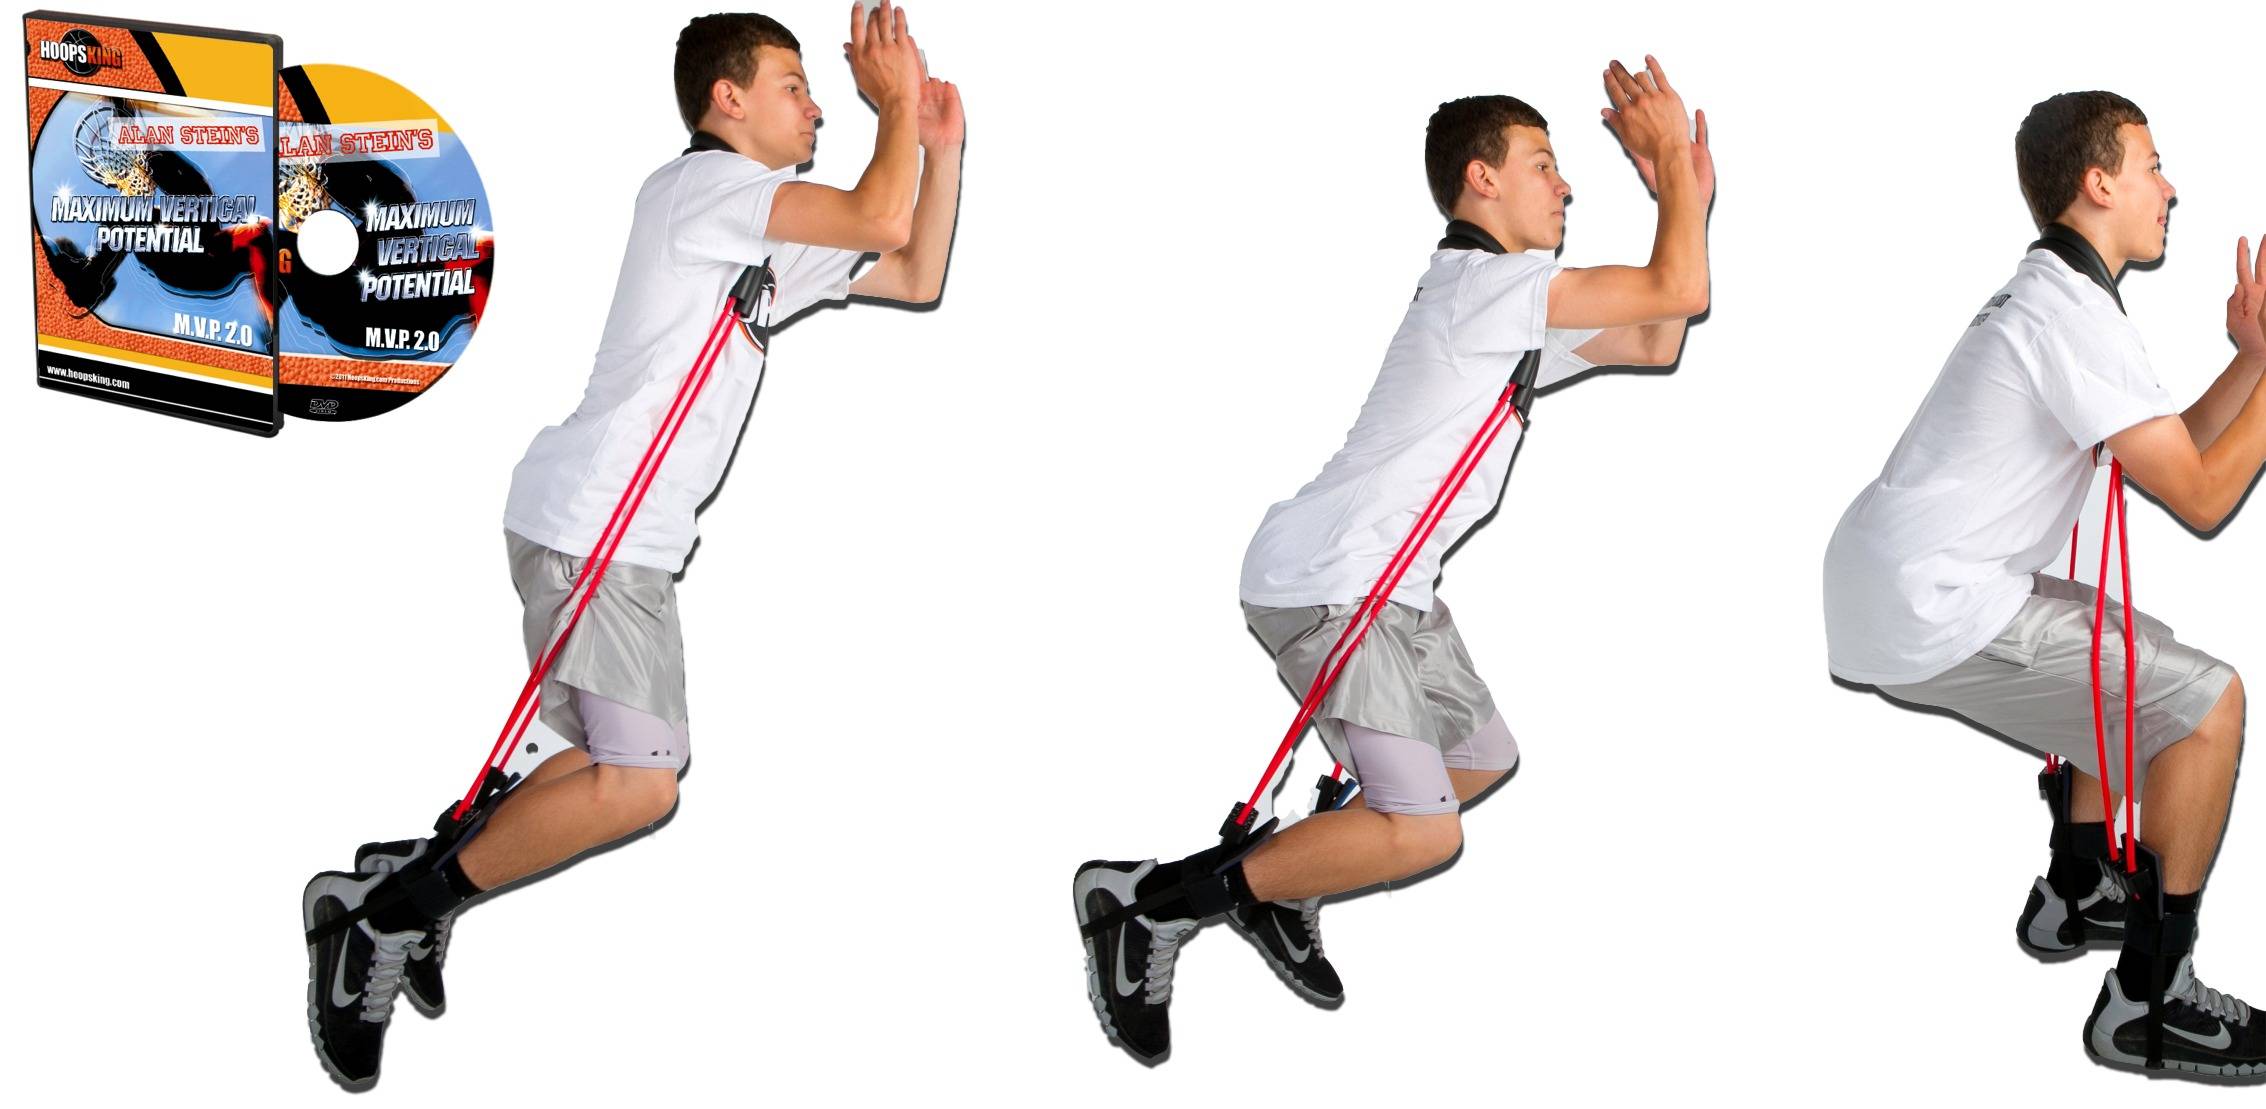 vertical jump training aids